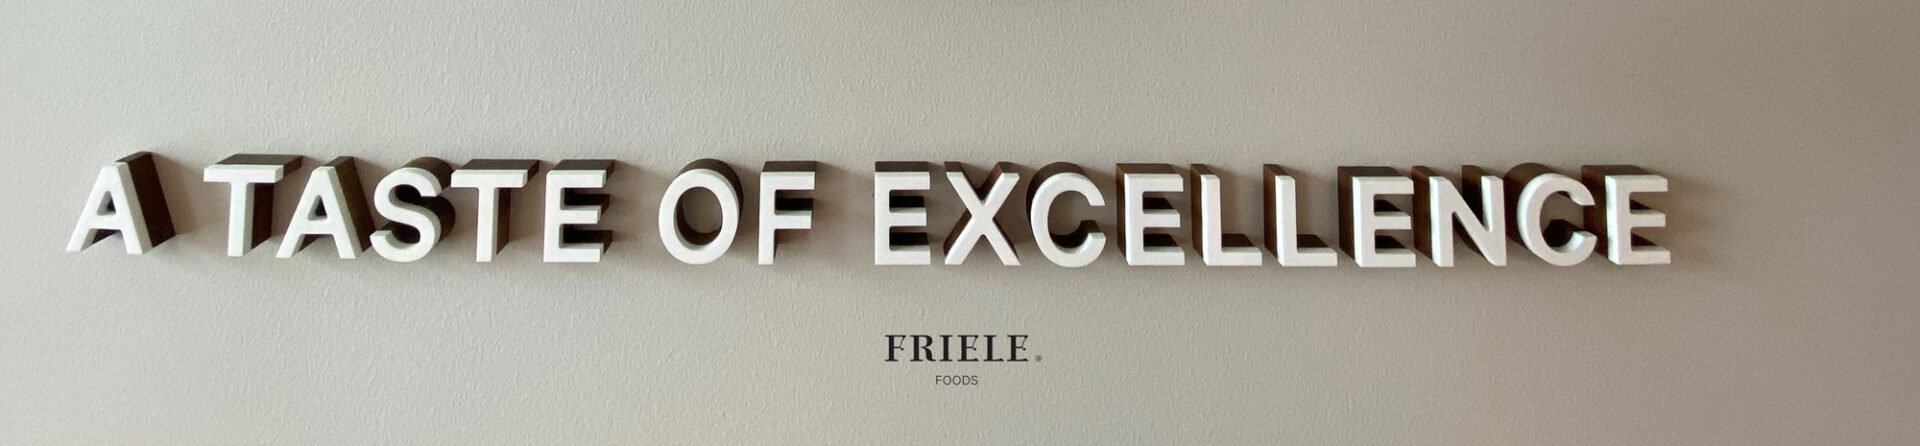 Friele Foods